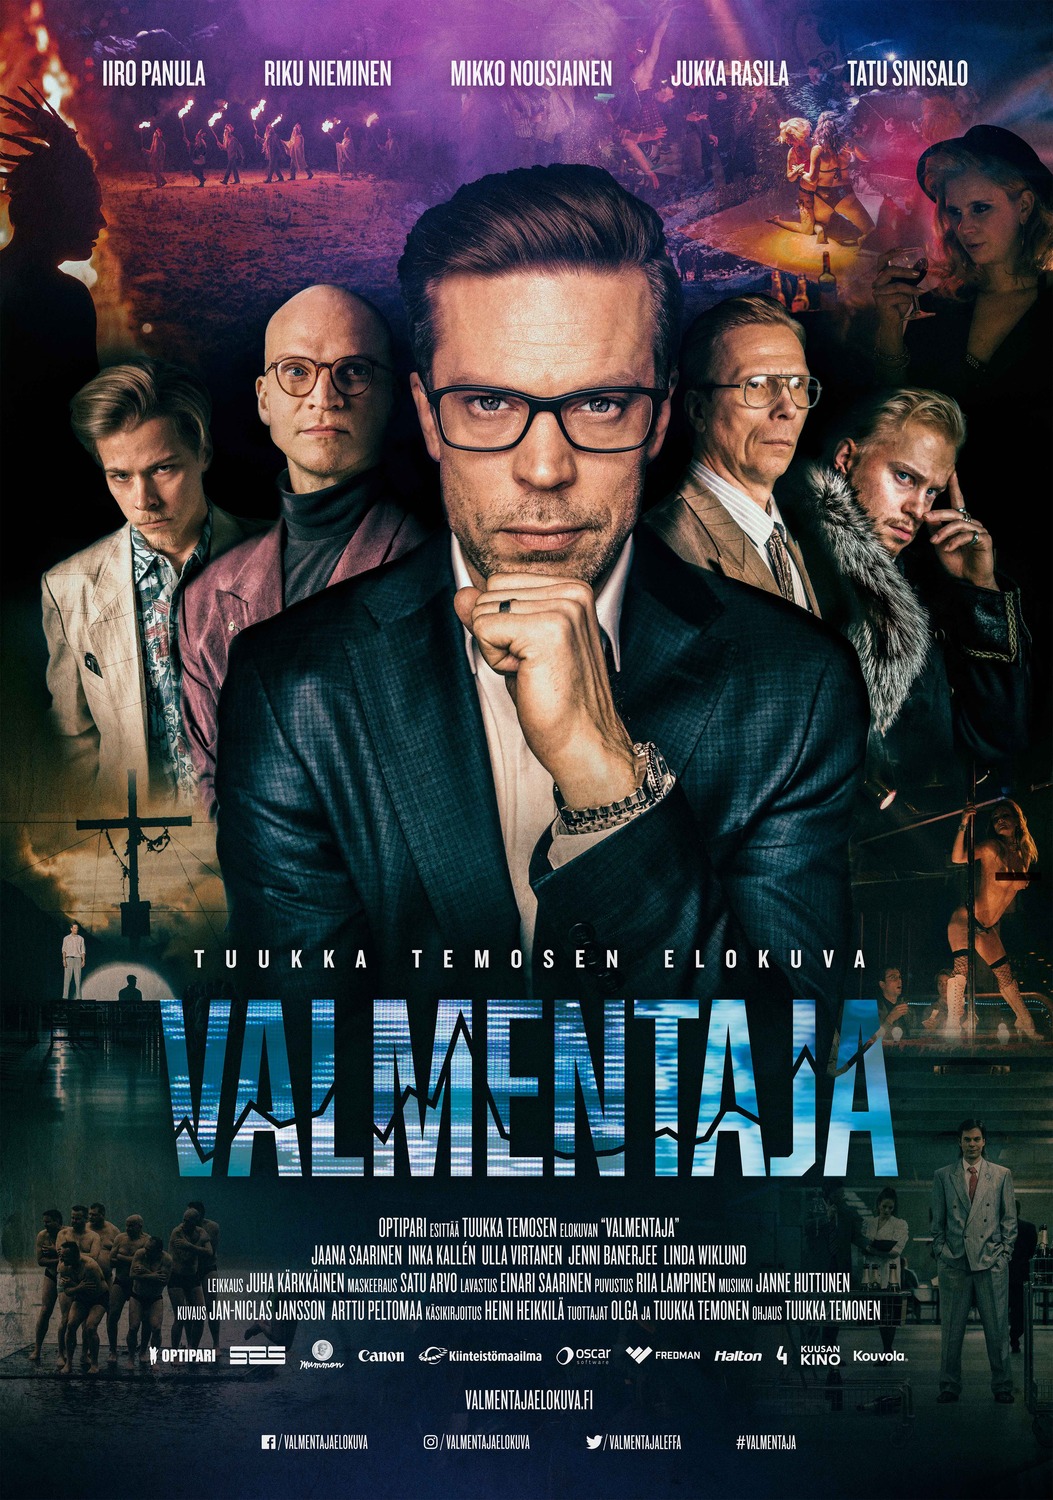 Extra Large Movie Poster Image for Valmentaja 